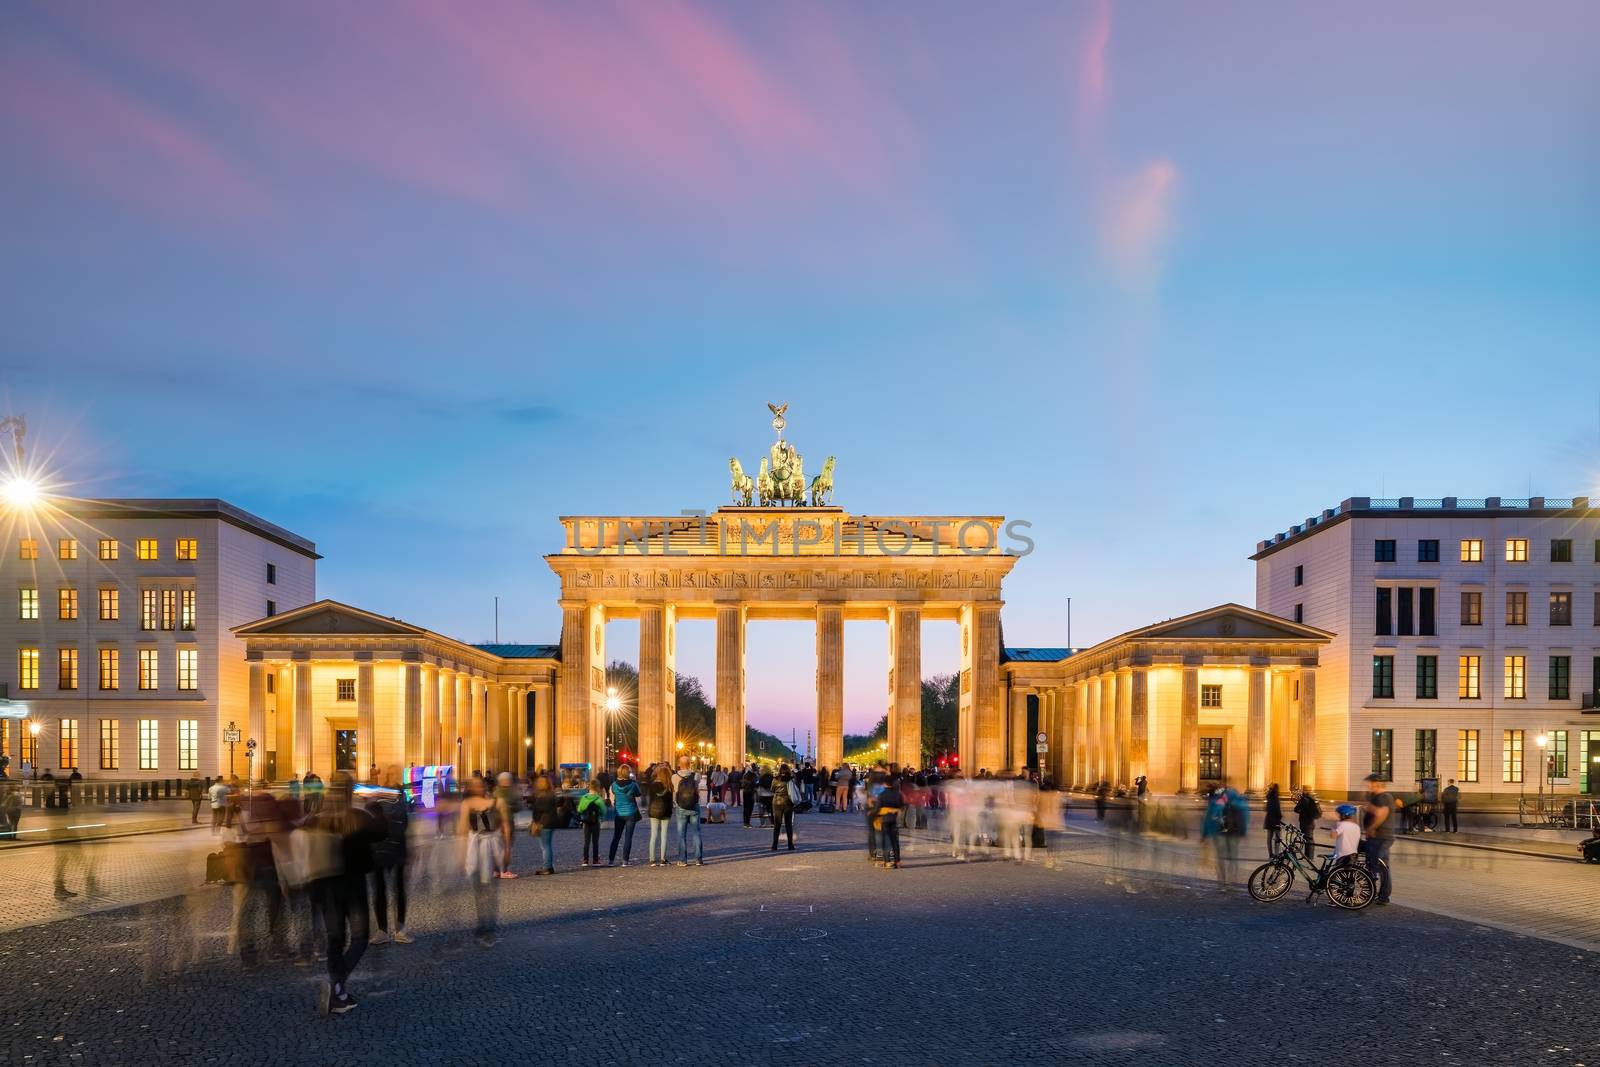 The Brandenburg Gate in Berlin at night, Germany